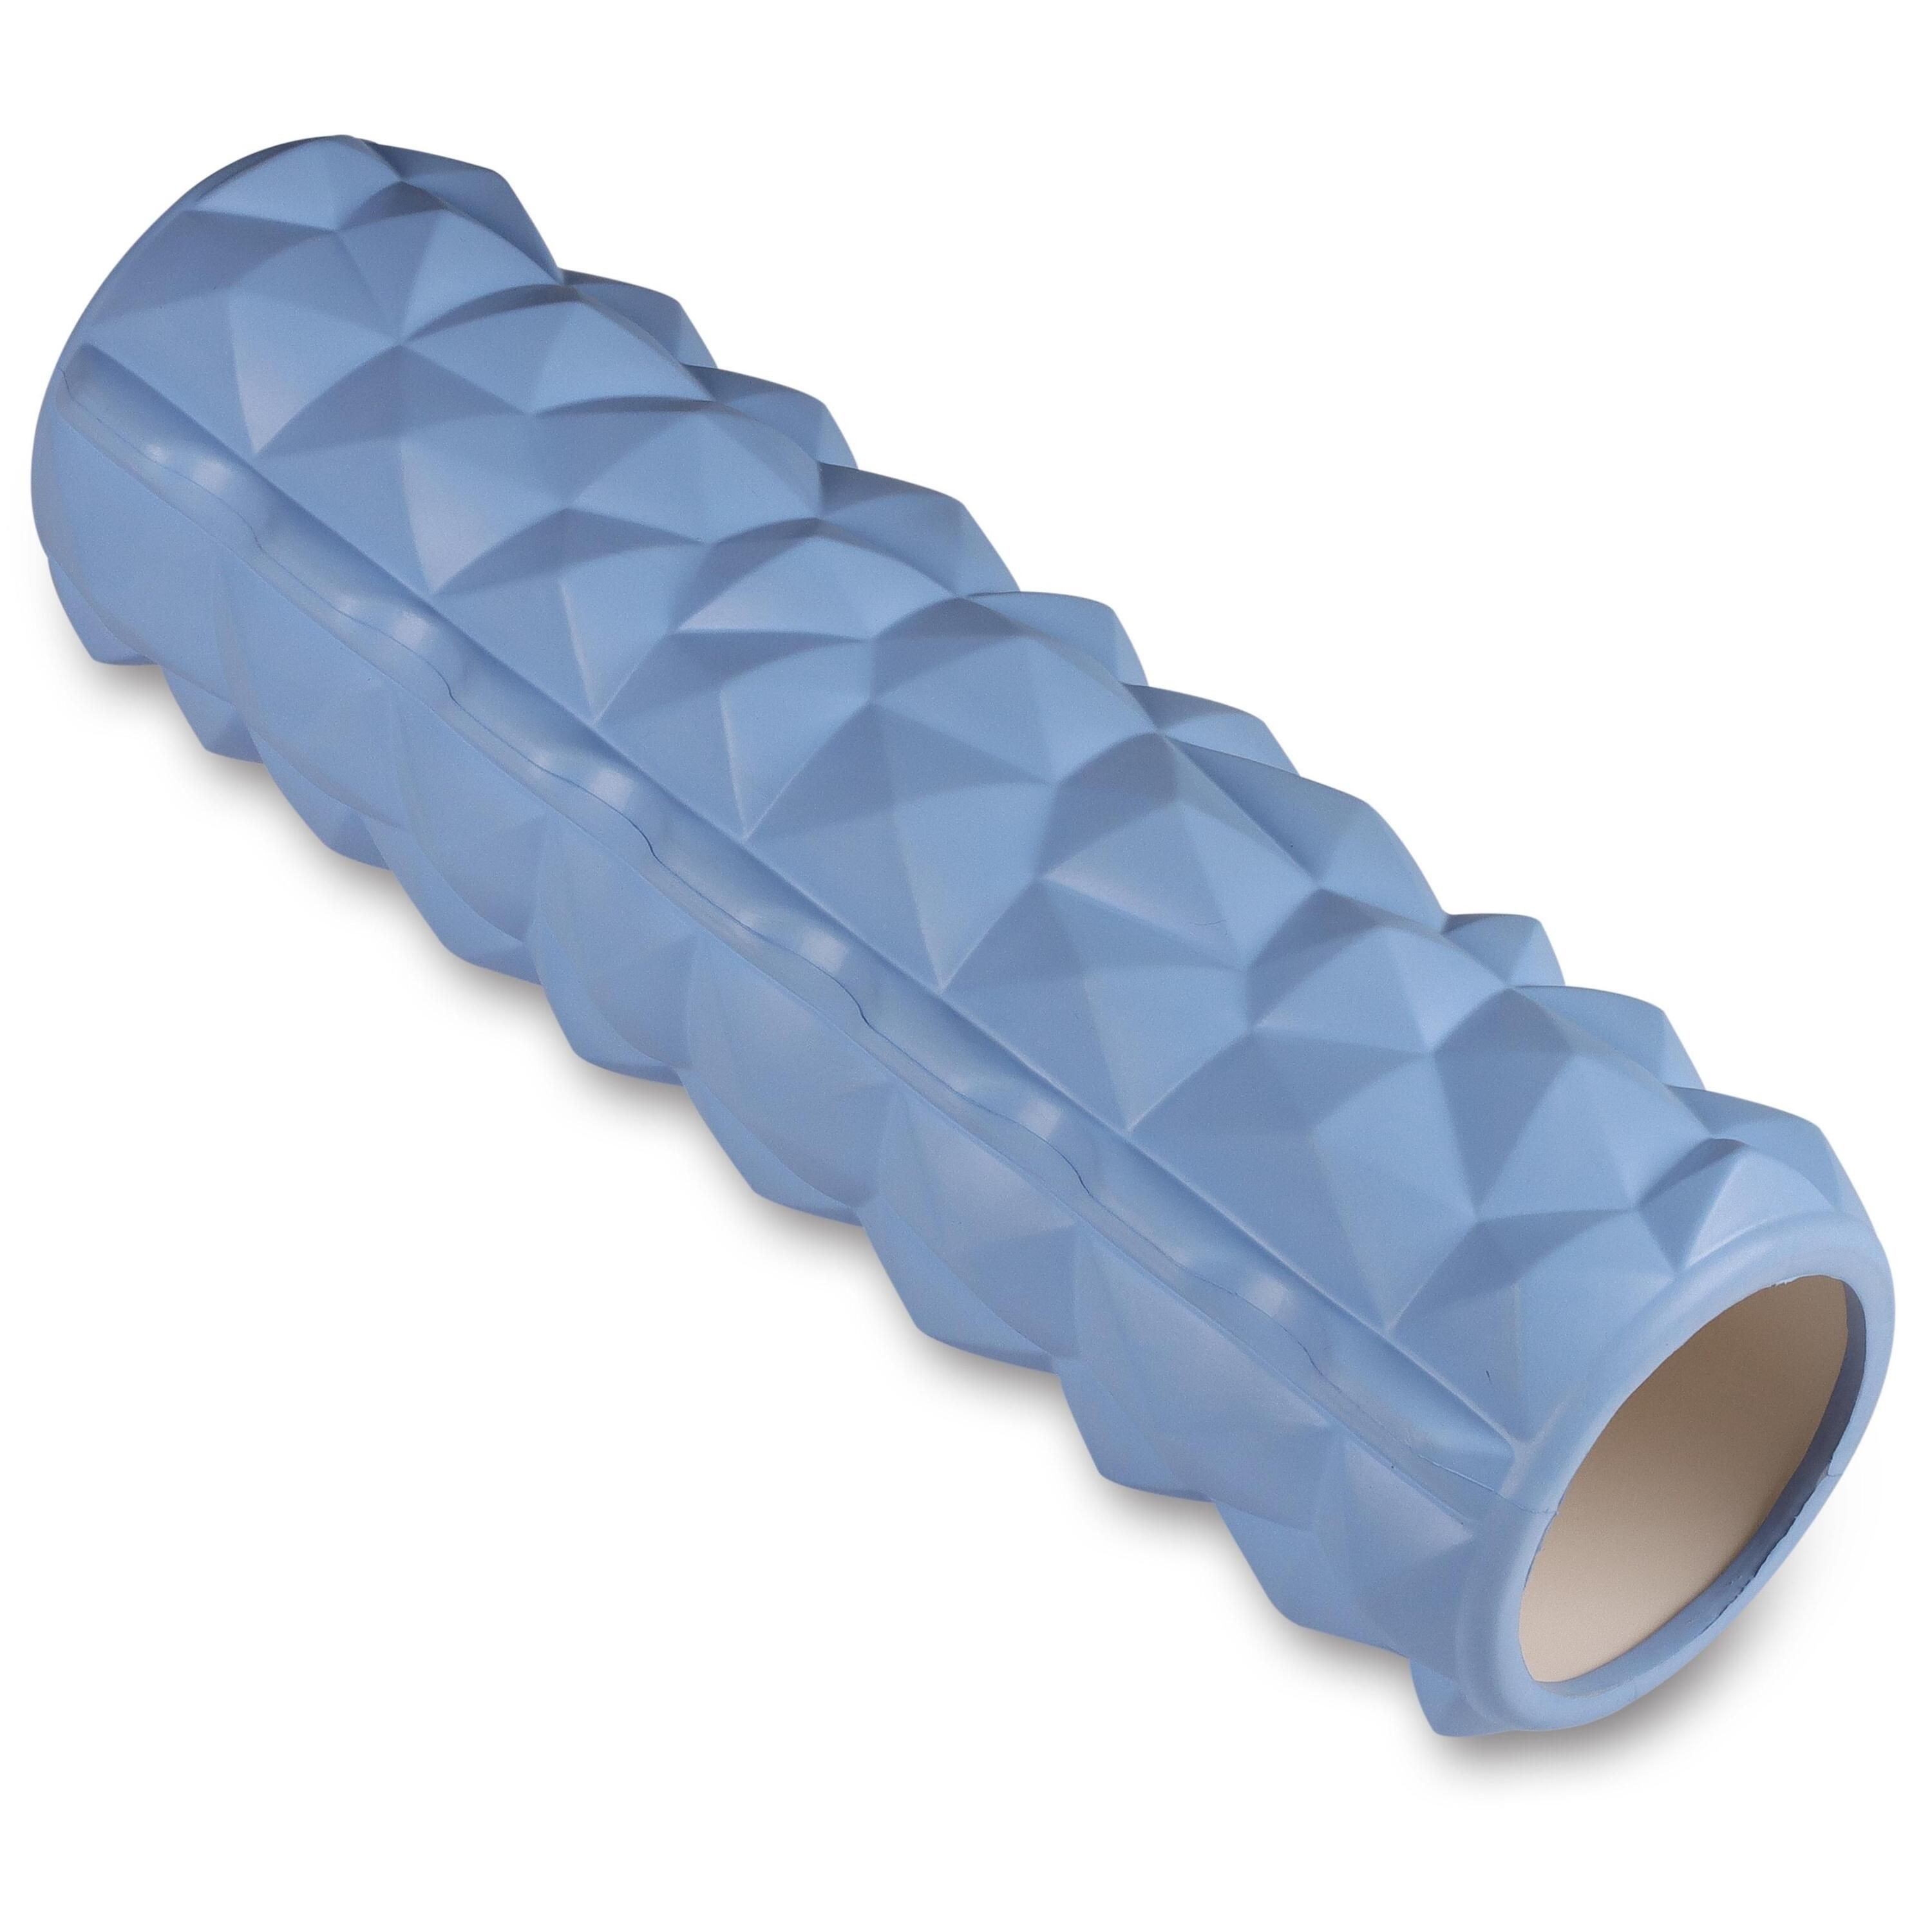 Rodillo de Espuma Redondo para Masajes Musculares y Yoga de PVC INDIGO 45*14 cm Azul Claro